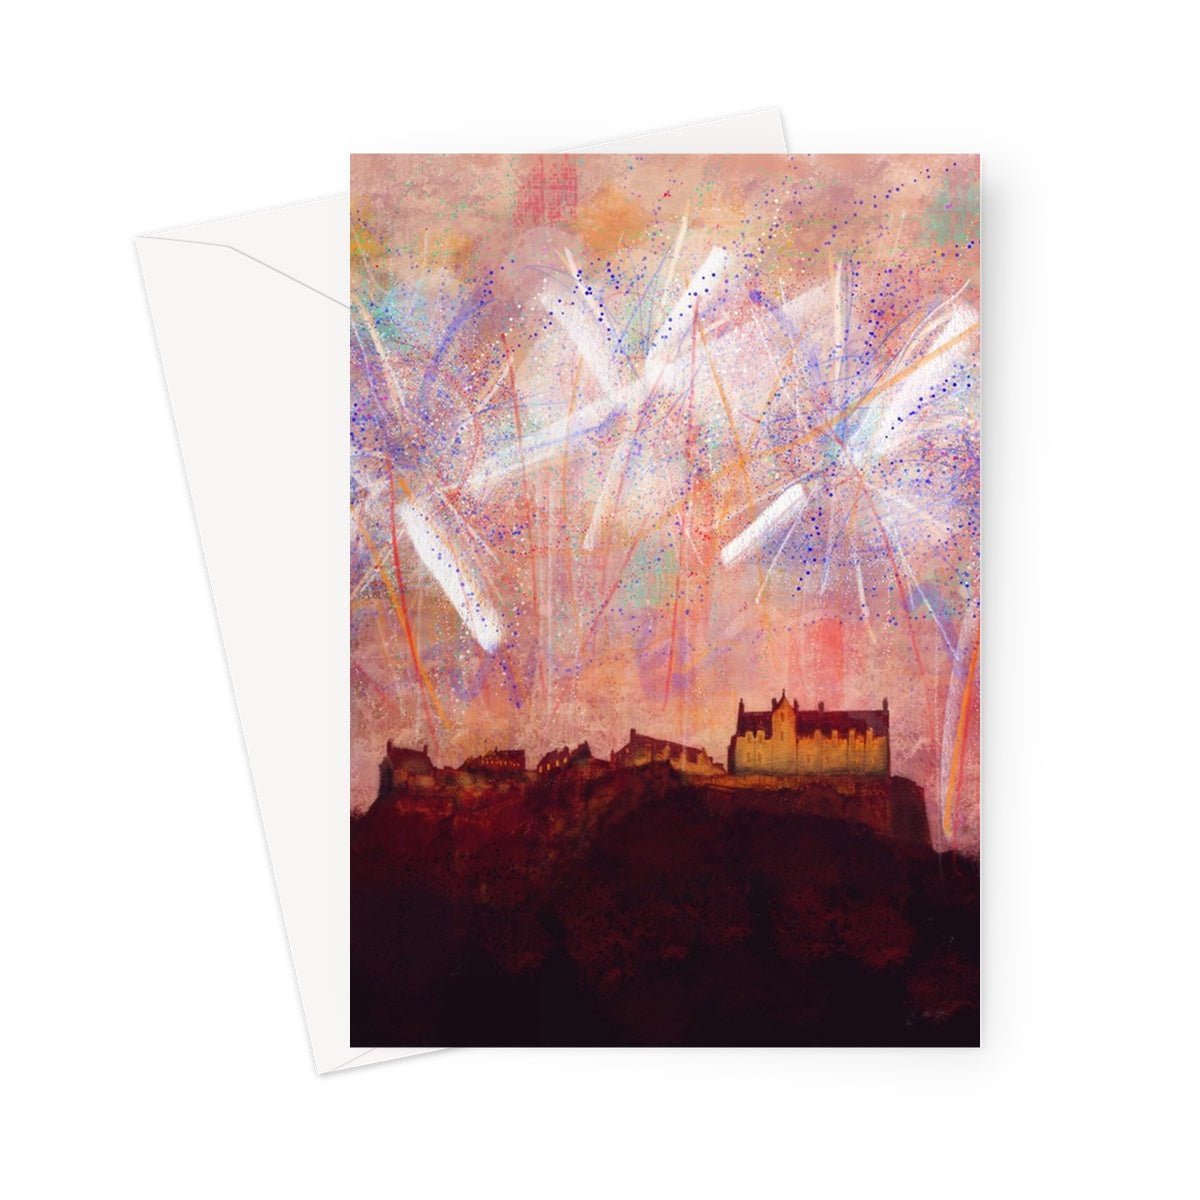 Edinburgh Castle Fireworks Art Gifts Greeting Card-Greetings Cards-Edinburgh & Glasgow Art Gallery-5"x7"-10 Cards-Paintings, Prints, Homeware, Art Gifts From Scotland By Scottish Artist Kevin Hunter